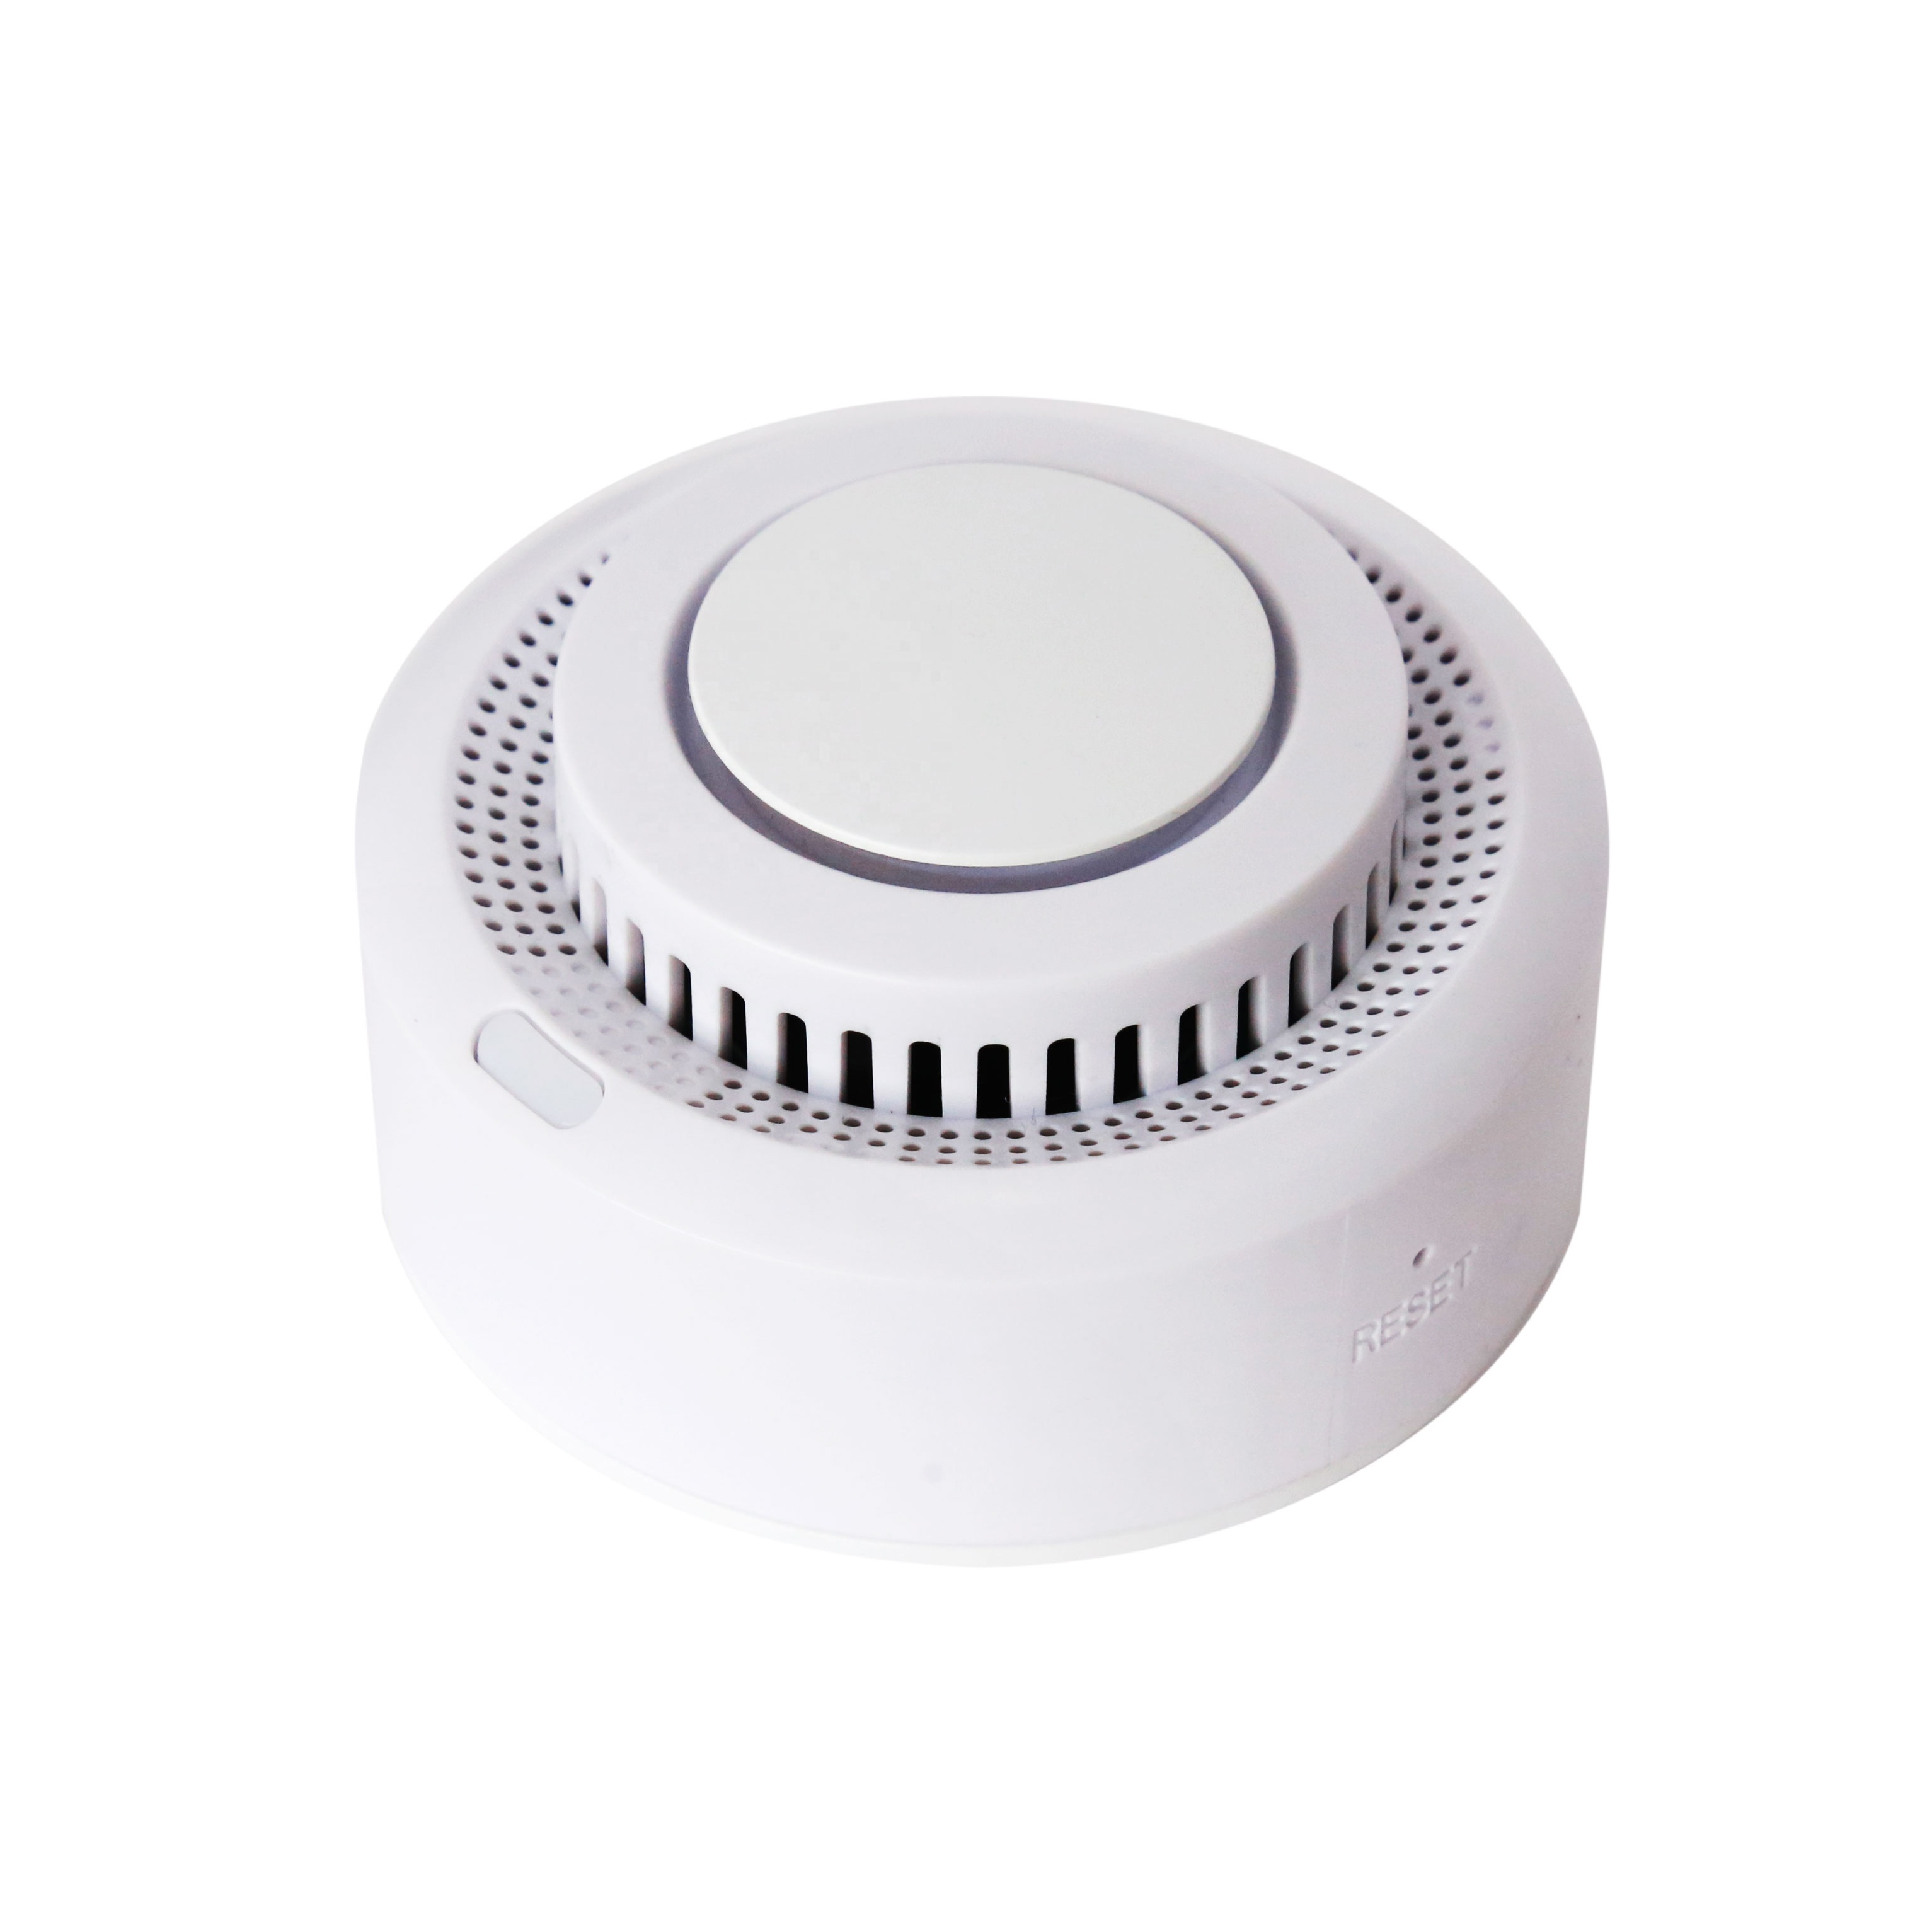 Wireless Tuya Smart Life APP Control Wifi Smoke alarm Detector High Sensitivity Smoke Sensor